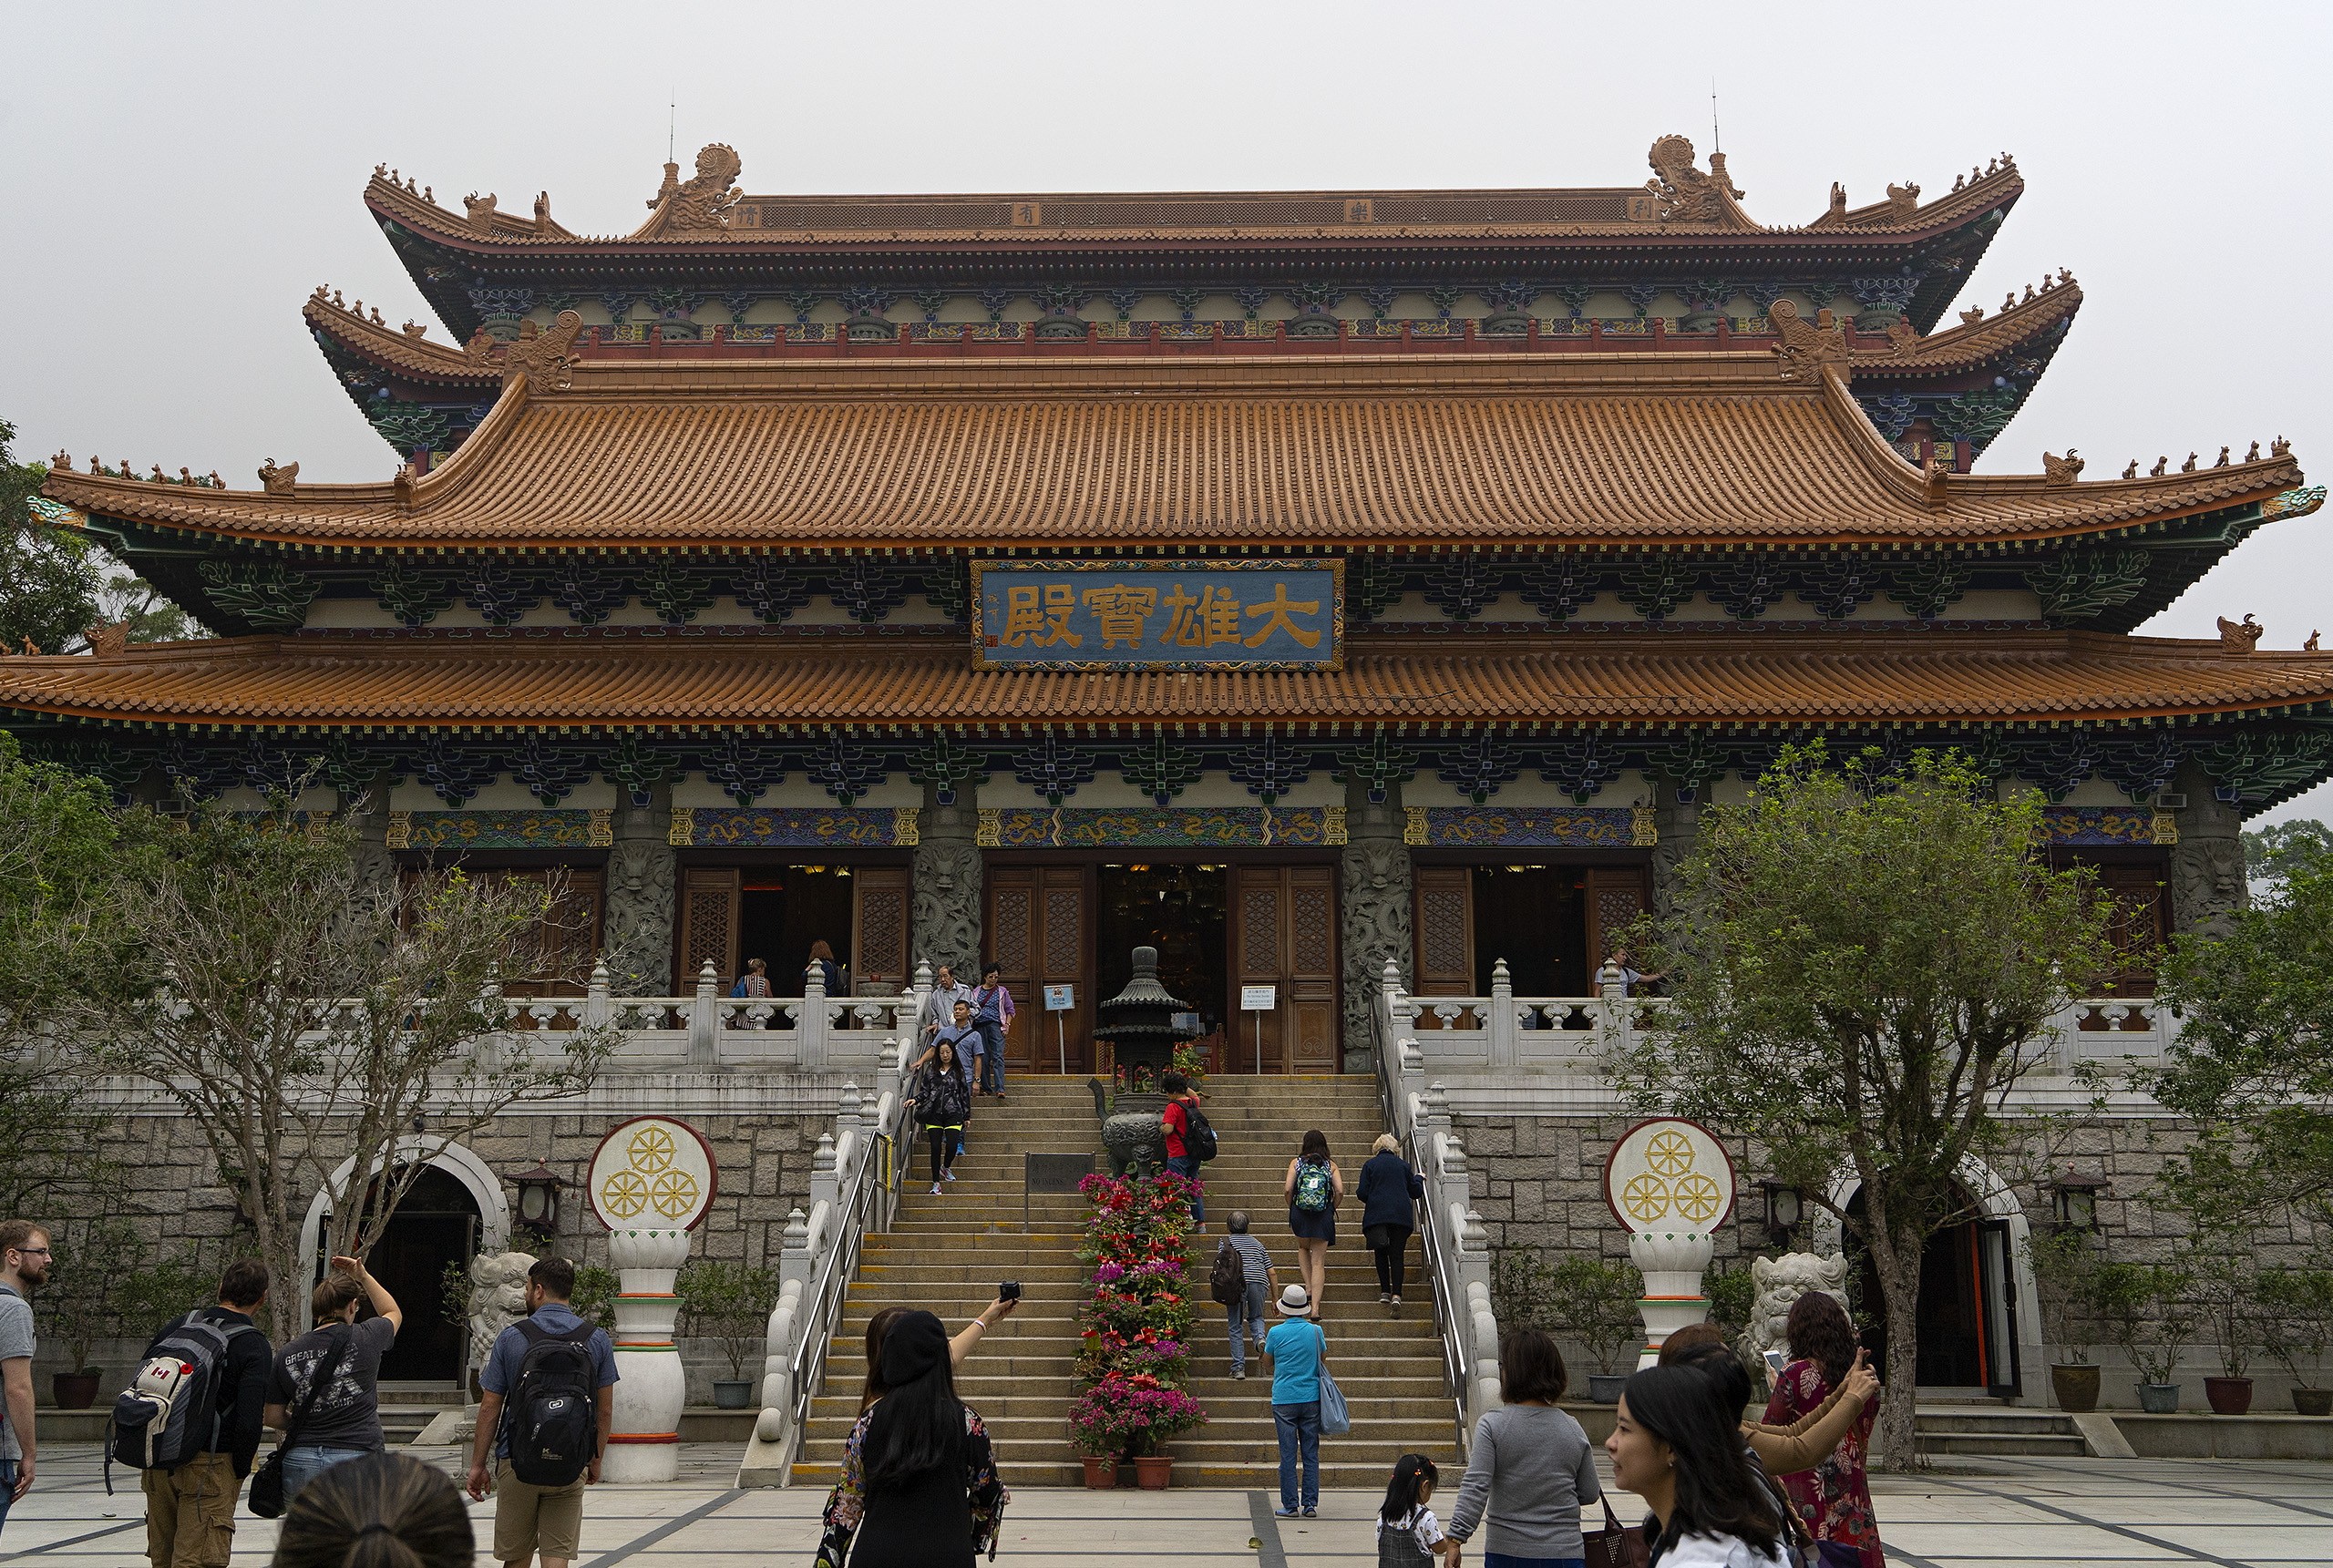 HK, Tian Temple